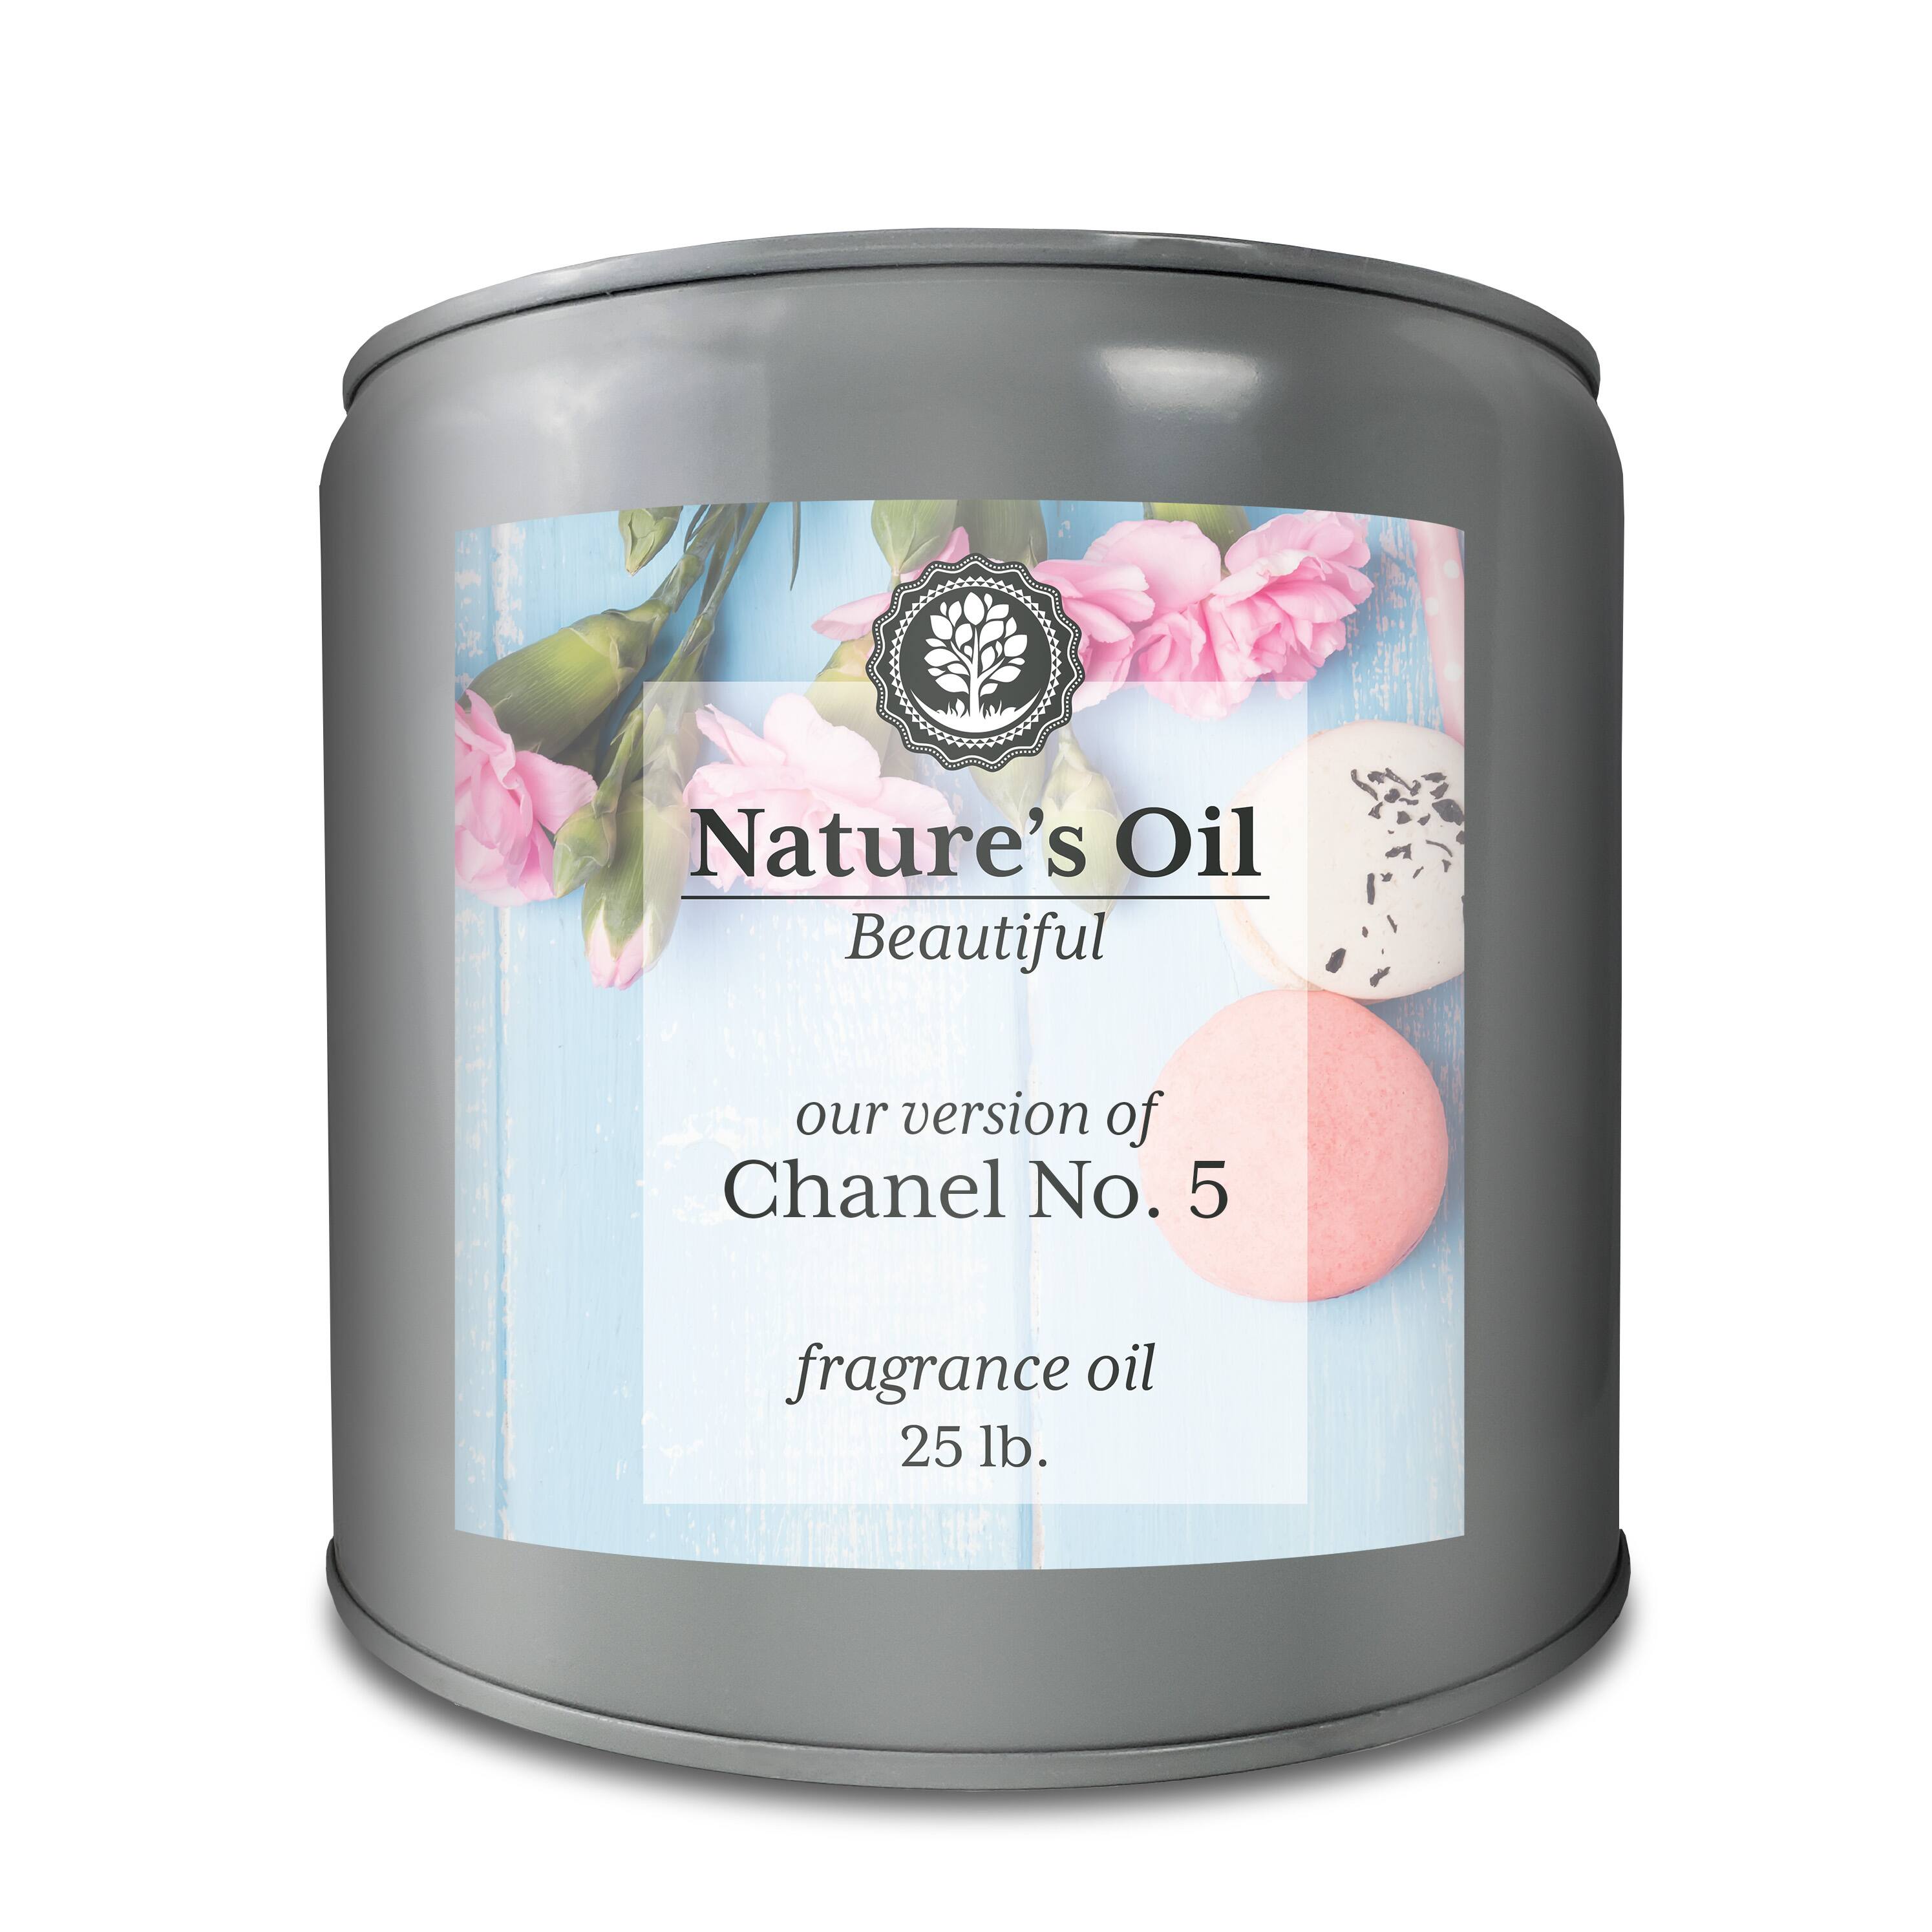 chanel 5 fragrance oil